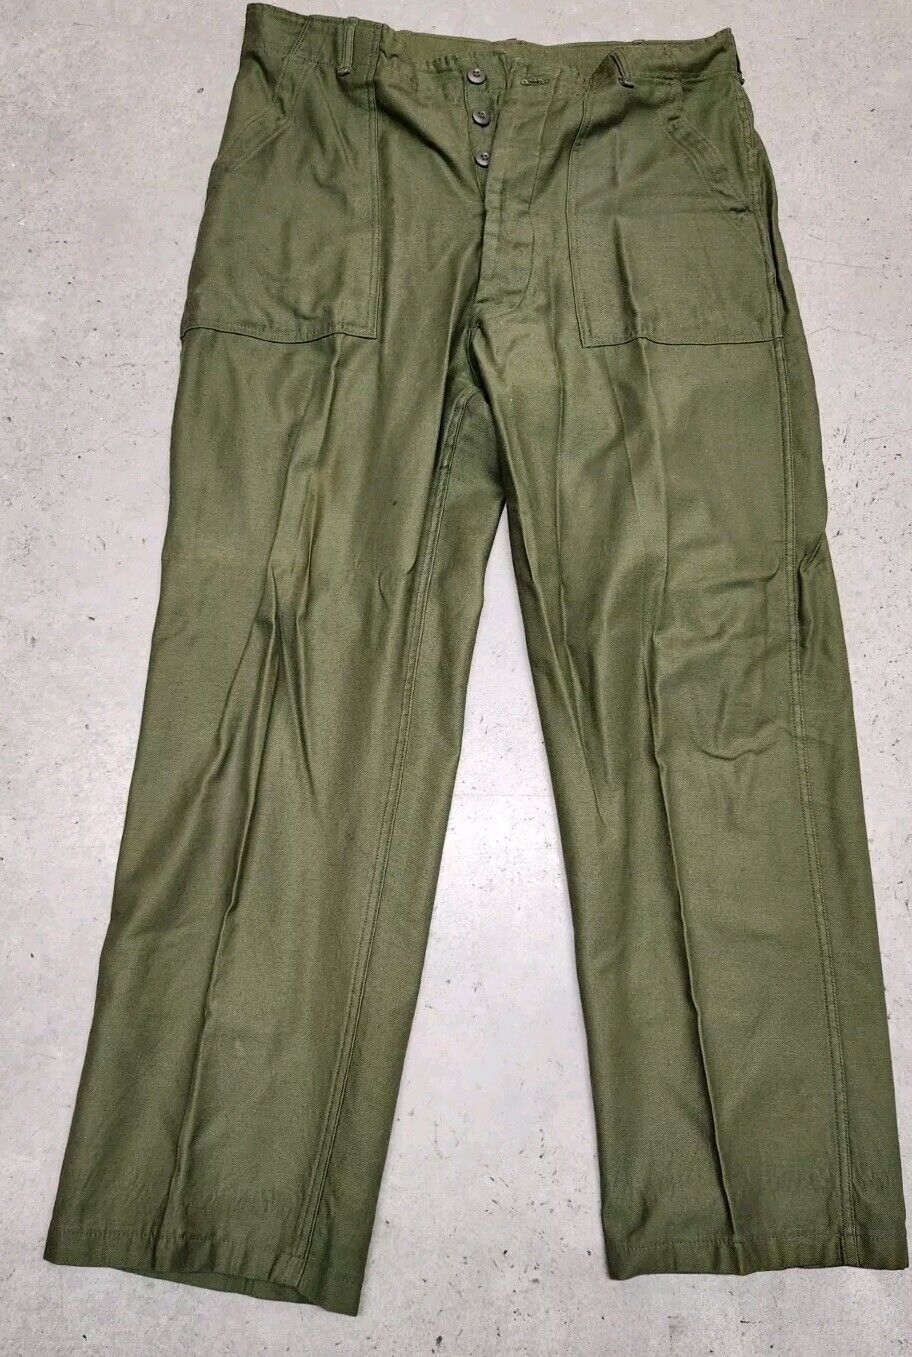 Vietnam War Era OG-107 Cotton Sateen Trousers Pants Cotton US Army Size Large